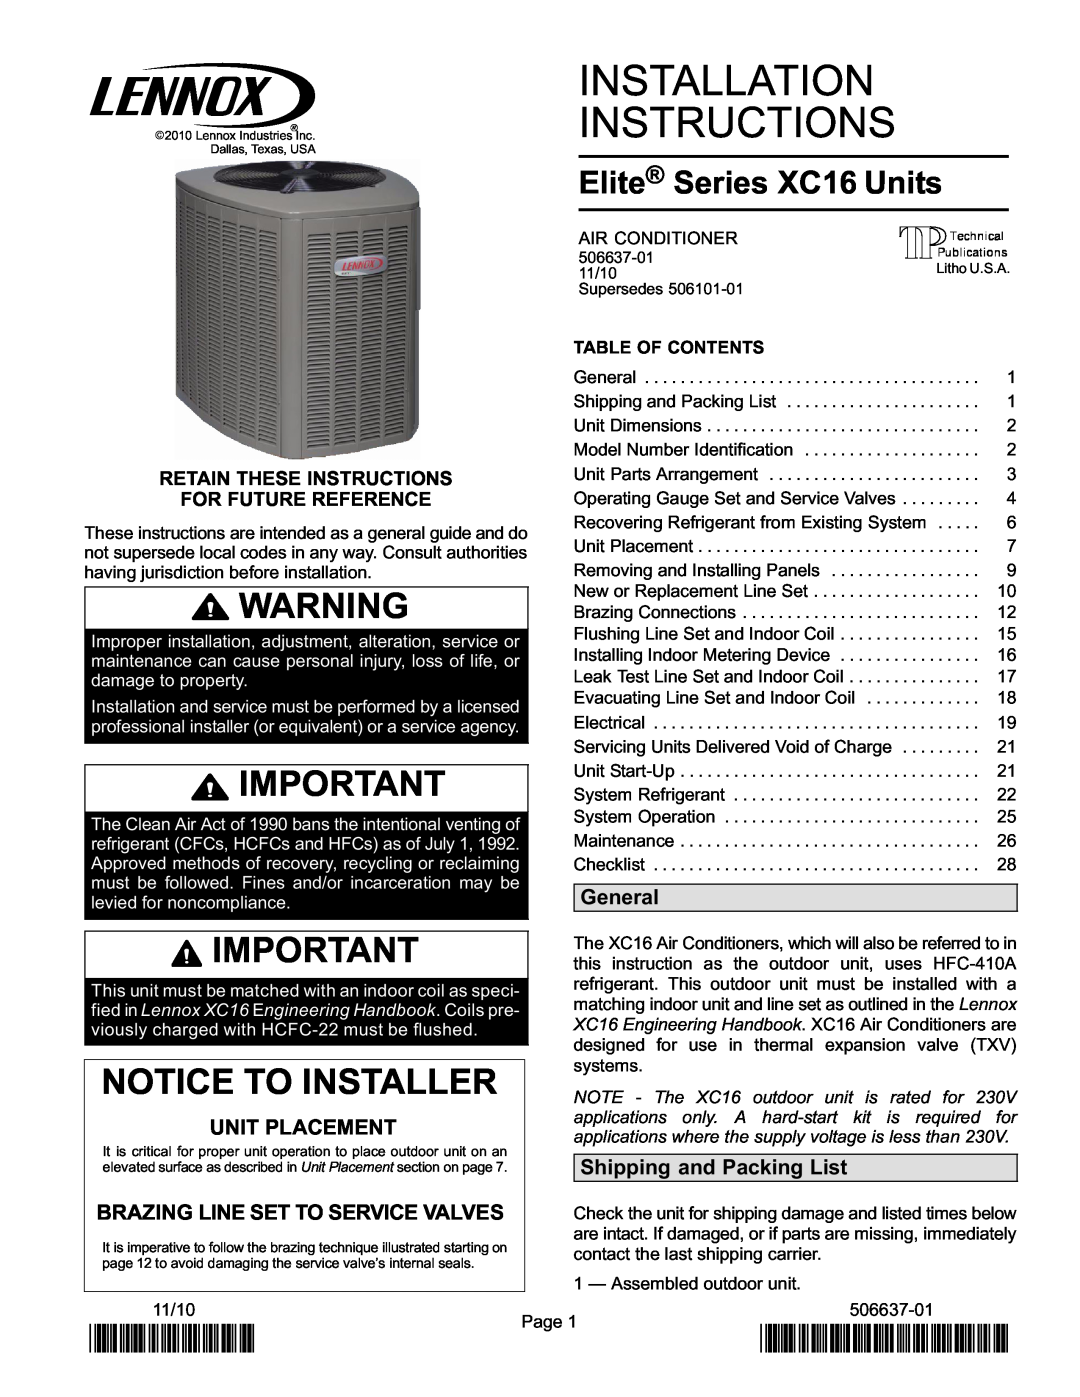 Lenox Elite Series X16 Air Conditioner Units installation instructions Notice To Installer, 2P1110, P506637-01, General 